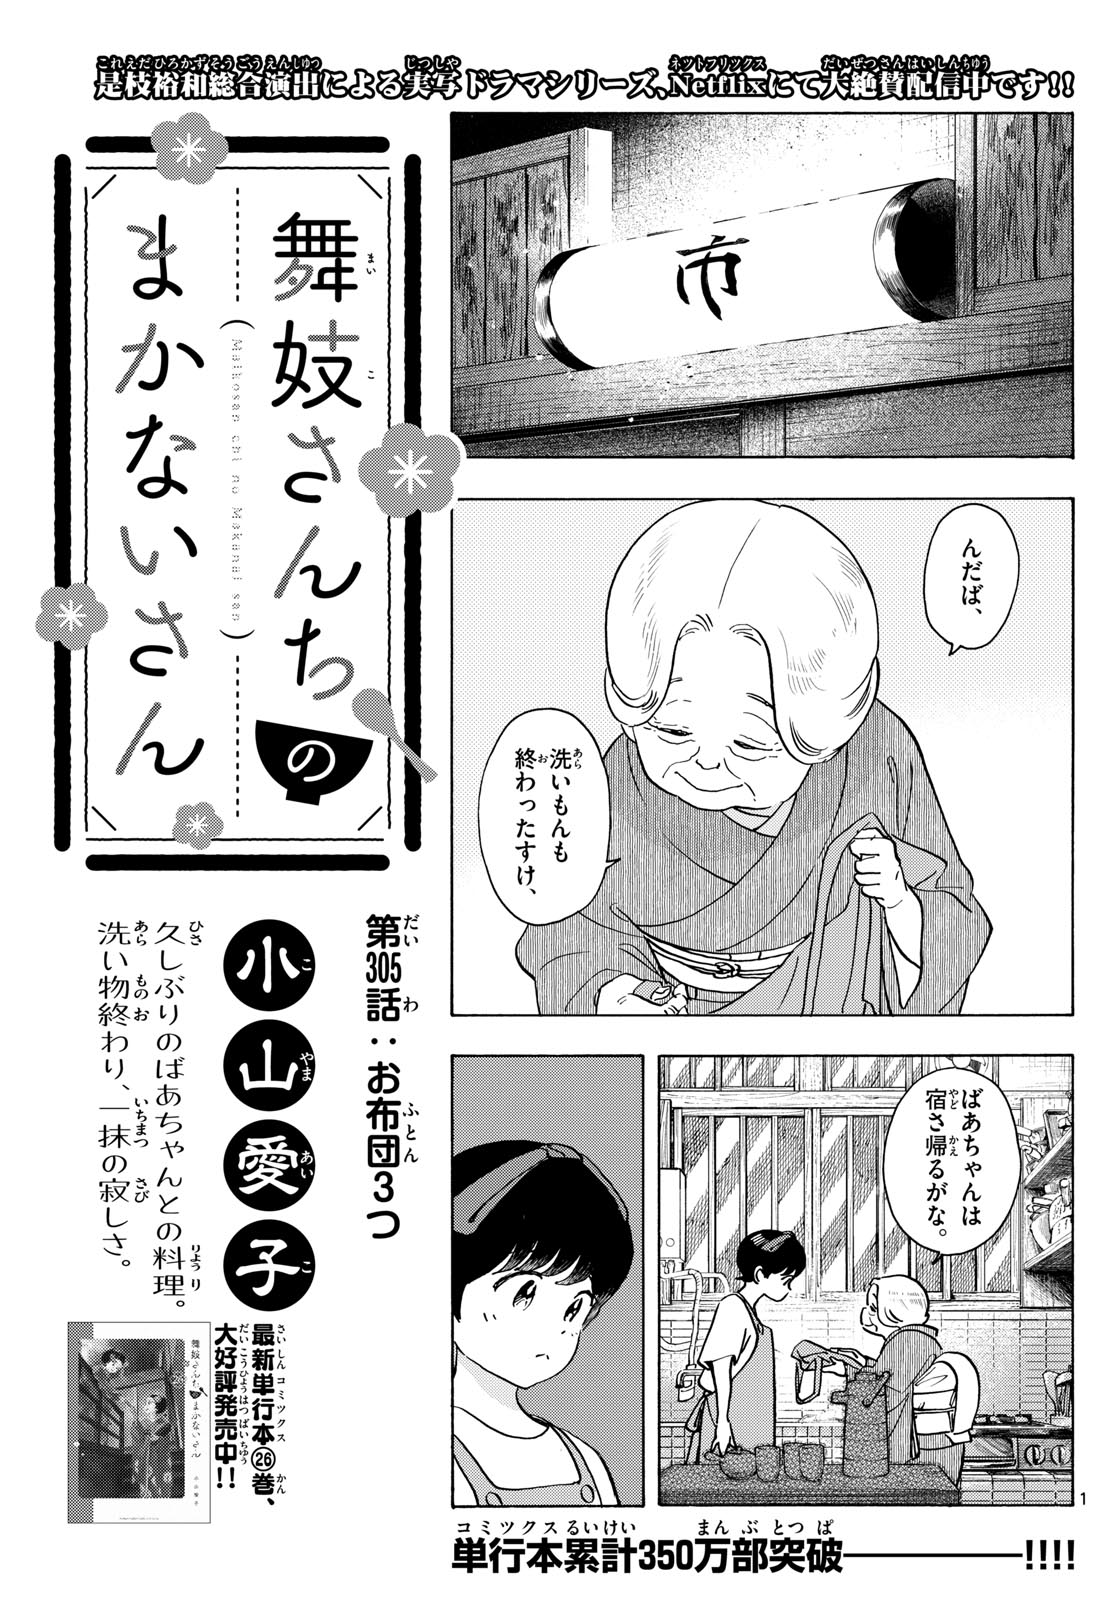 Maiko-san Chi no Makanai-san - Chapter 305 - Page 1